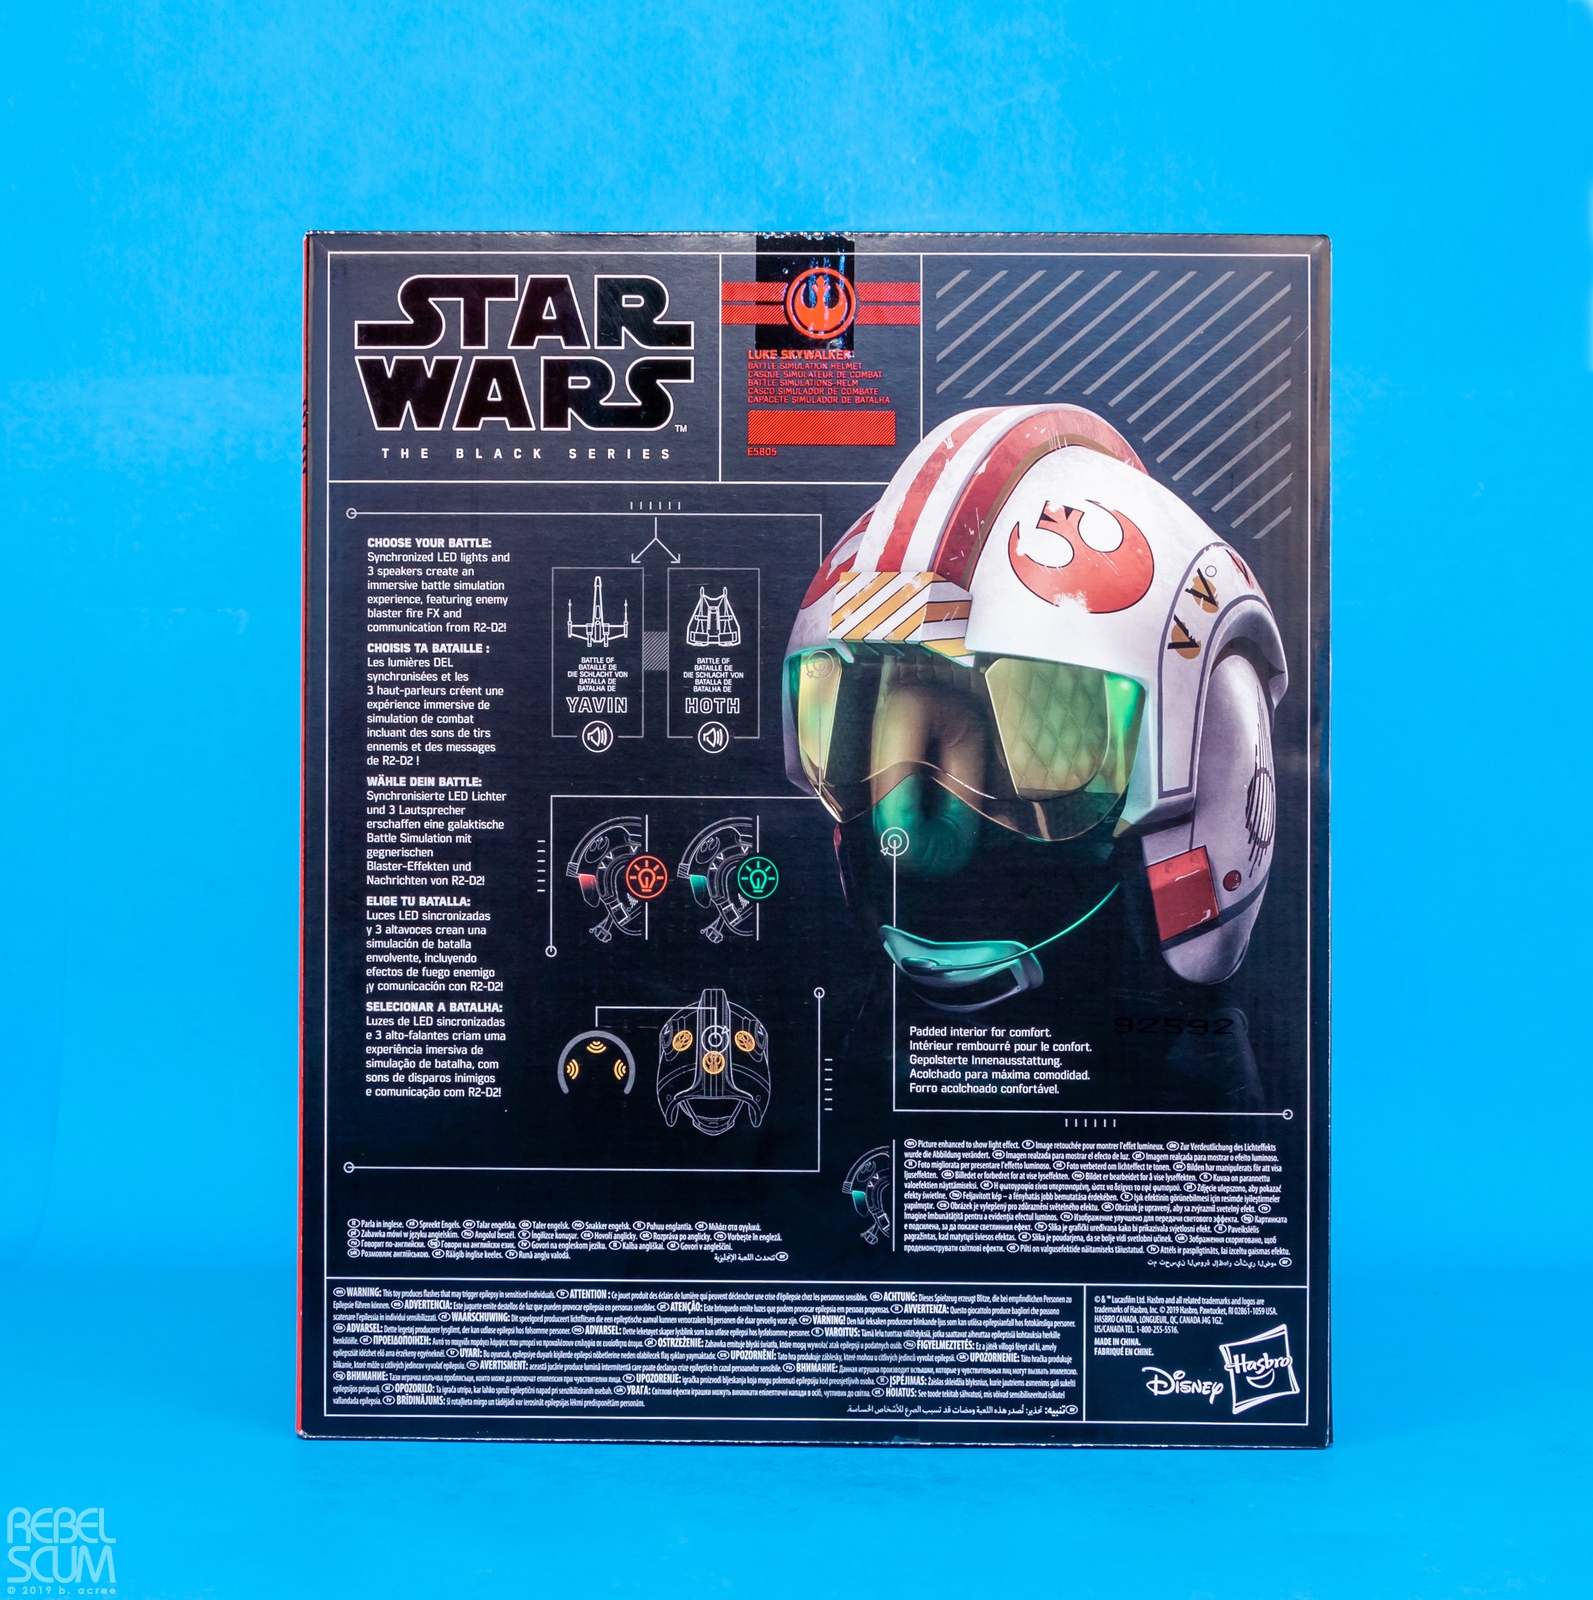 The-Black-Series-Luke-Skywalker-Battle-Simulation-Helmet012.jpg